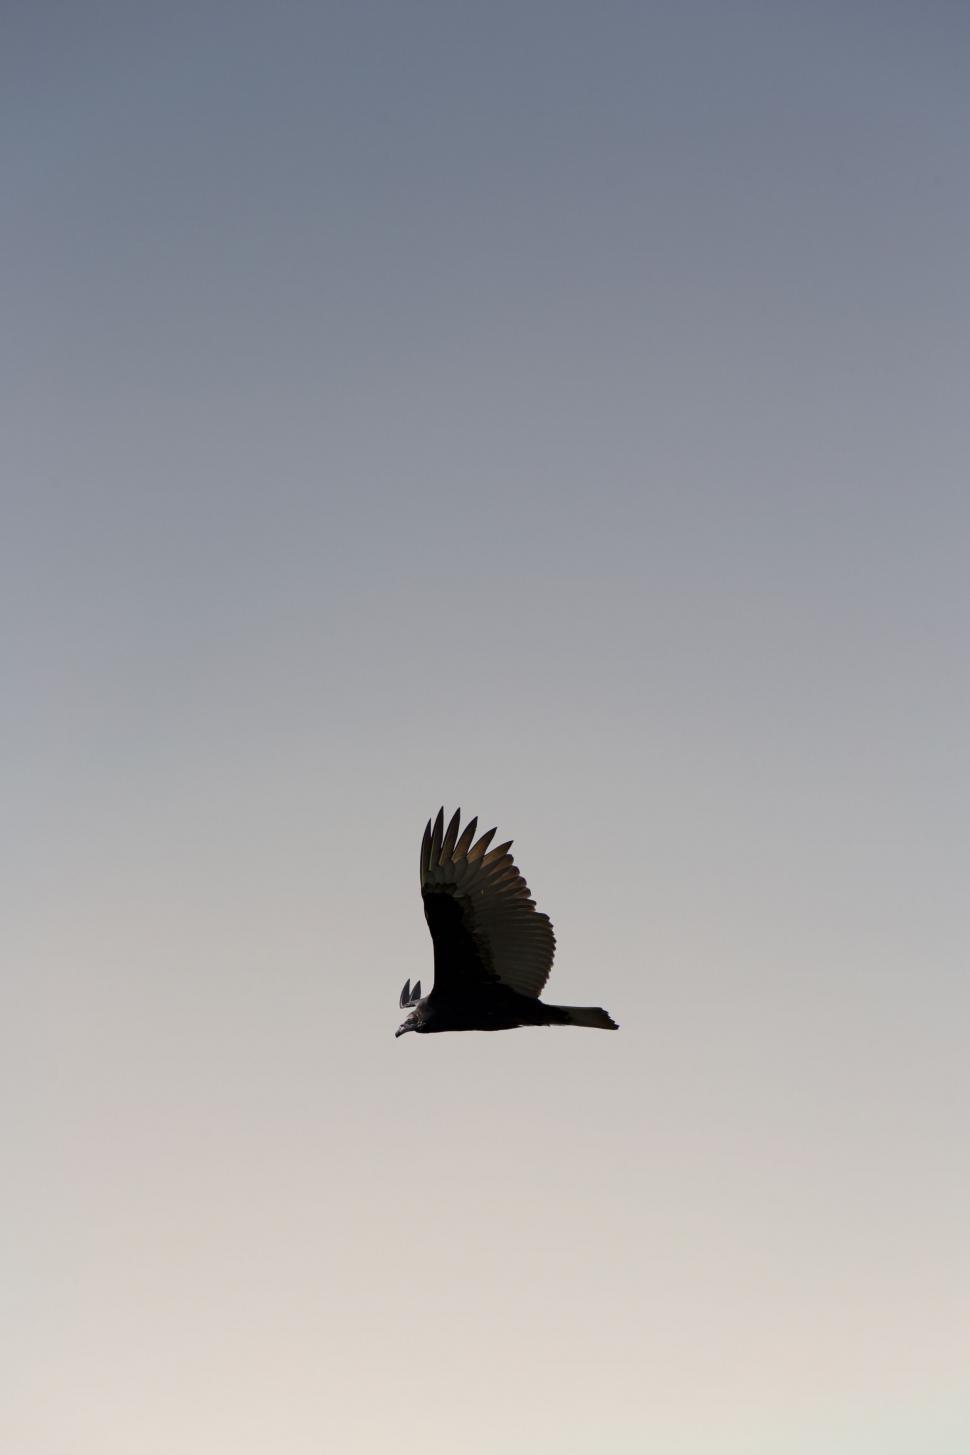 Free Image of Solitary bird in flight at twilight 